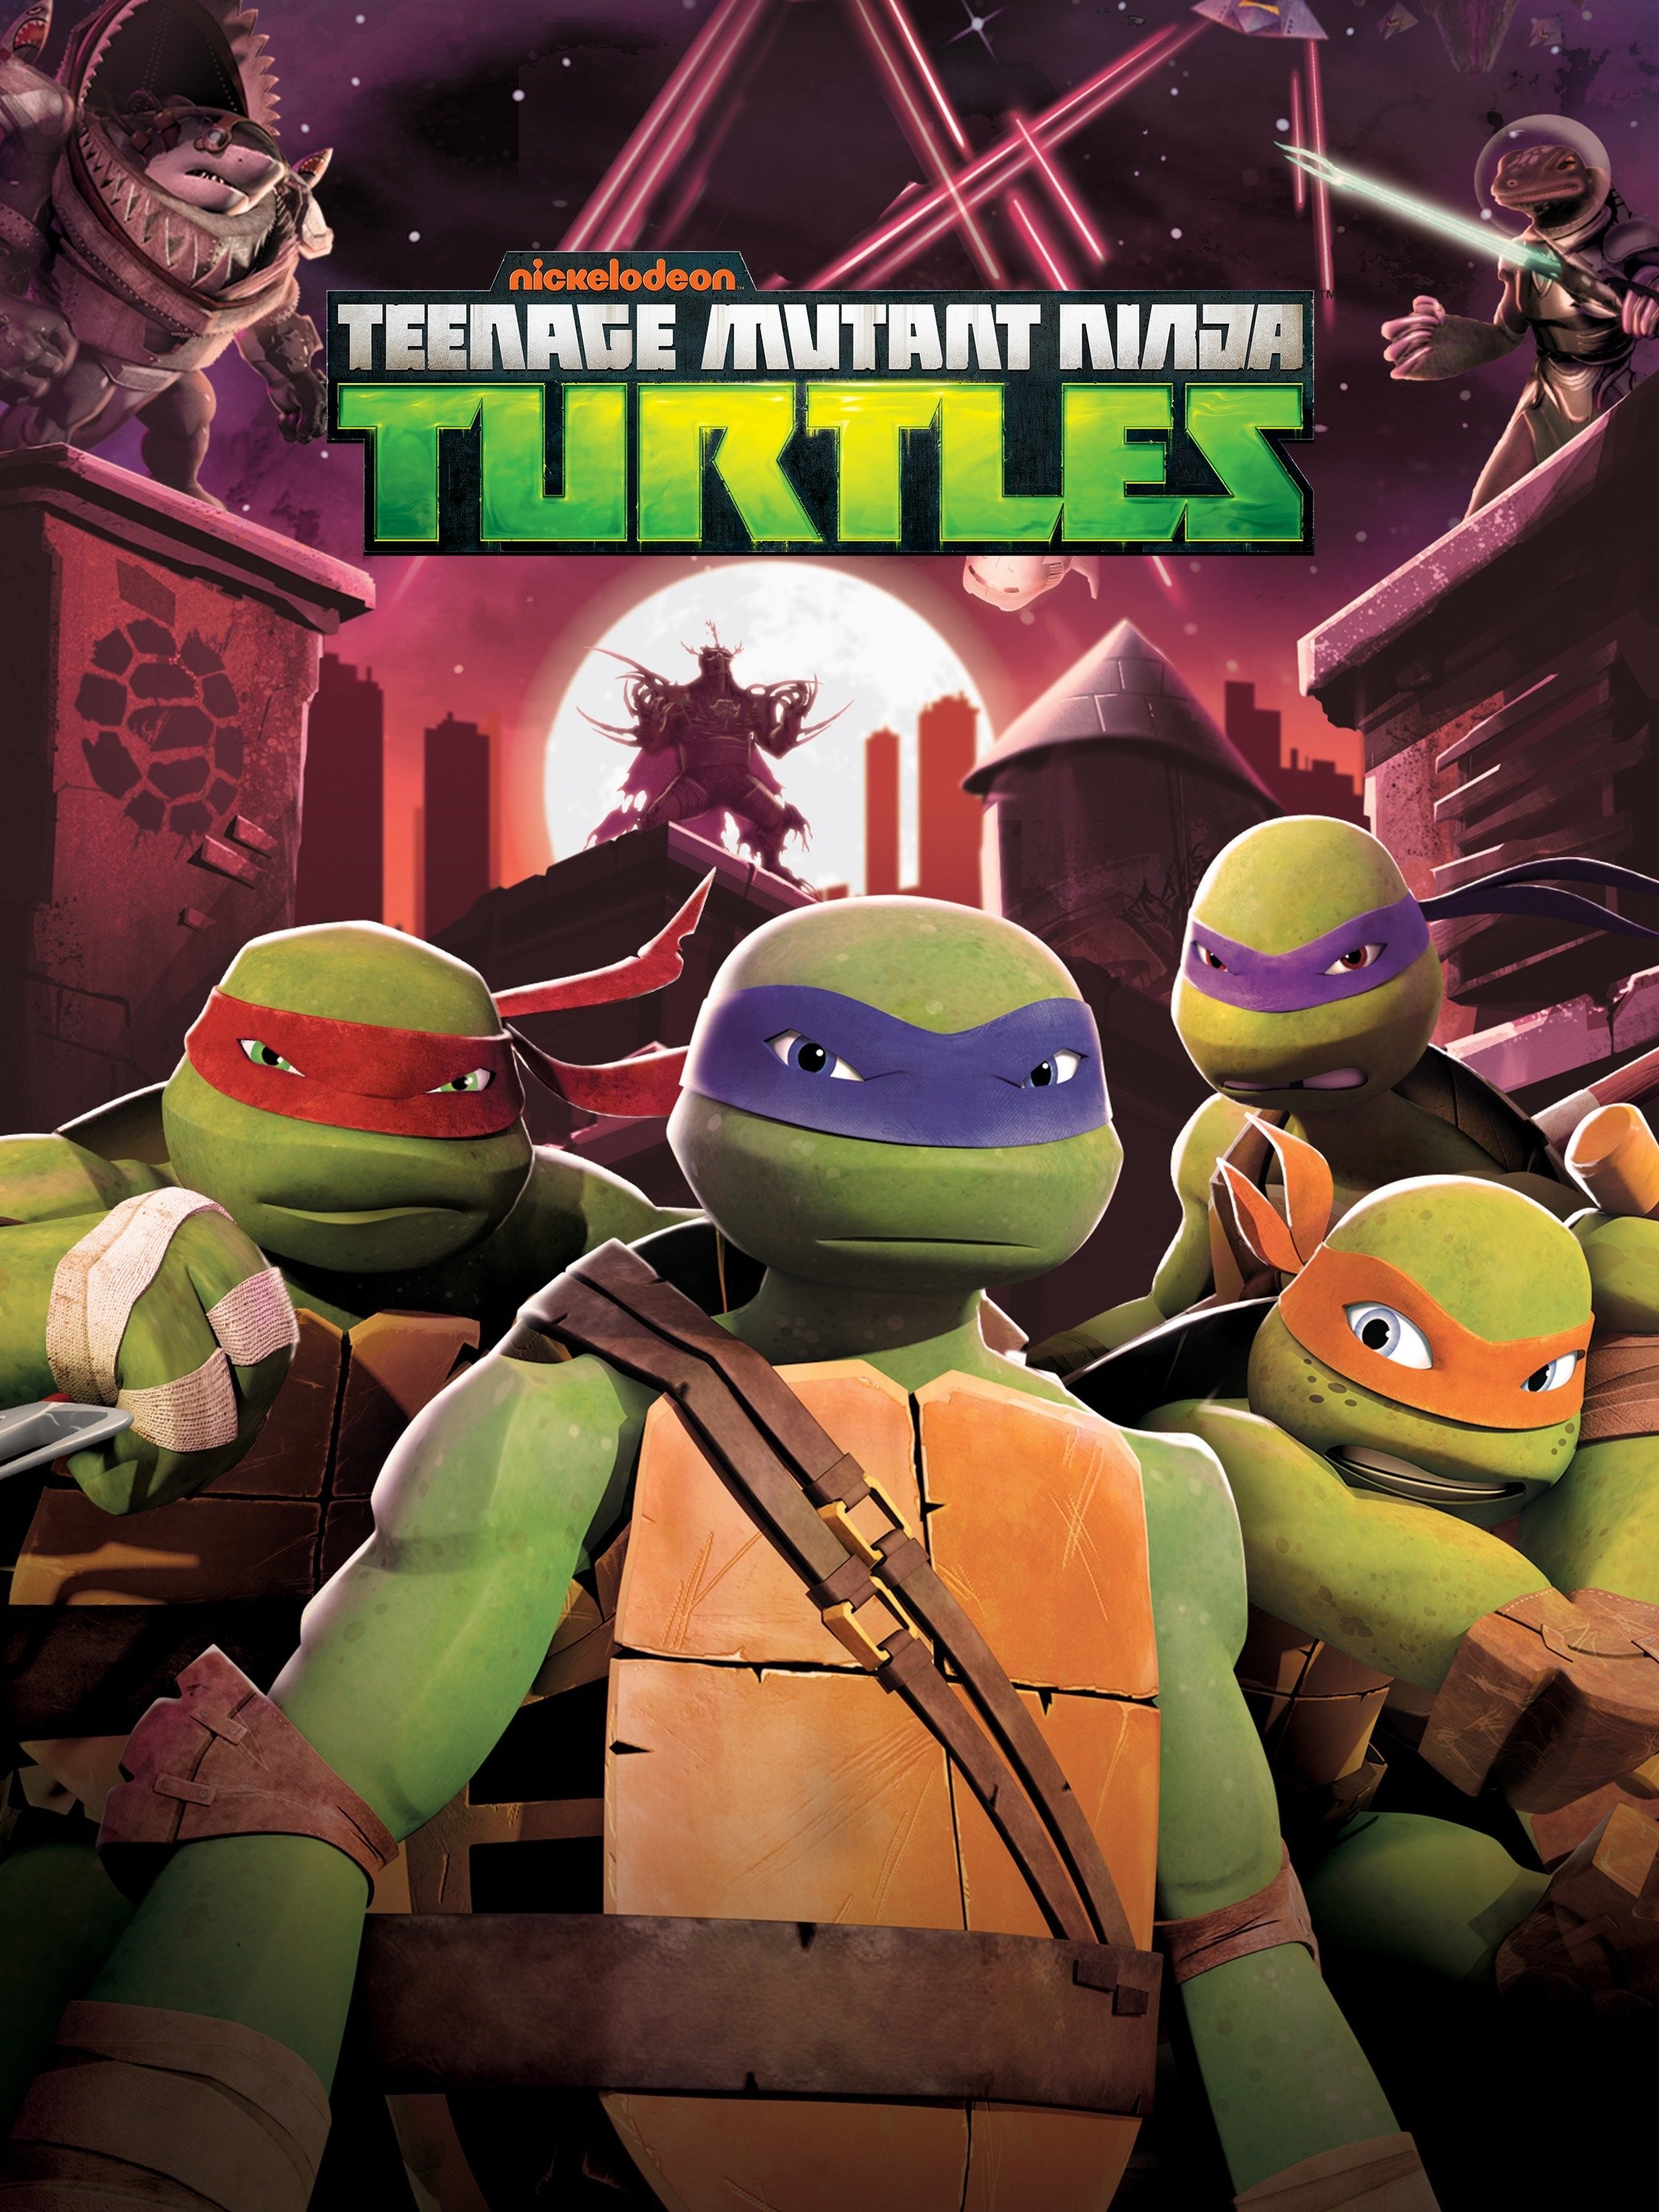 Video Review of the Nickelodeon Teenage Mutant Ninja Turtles: Live